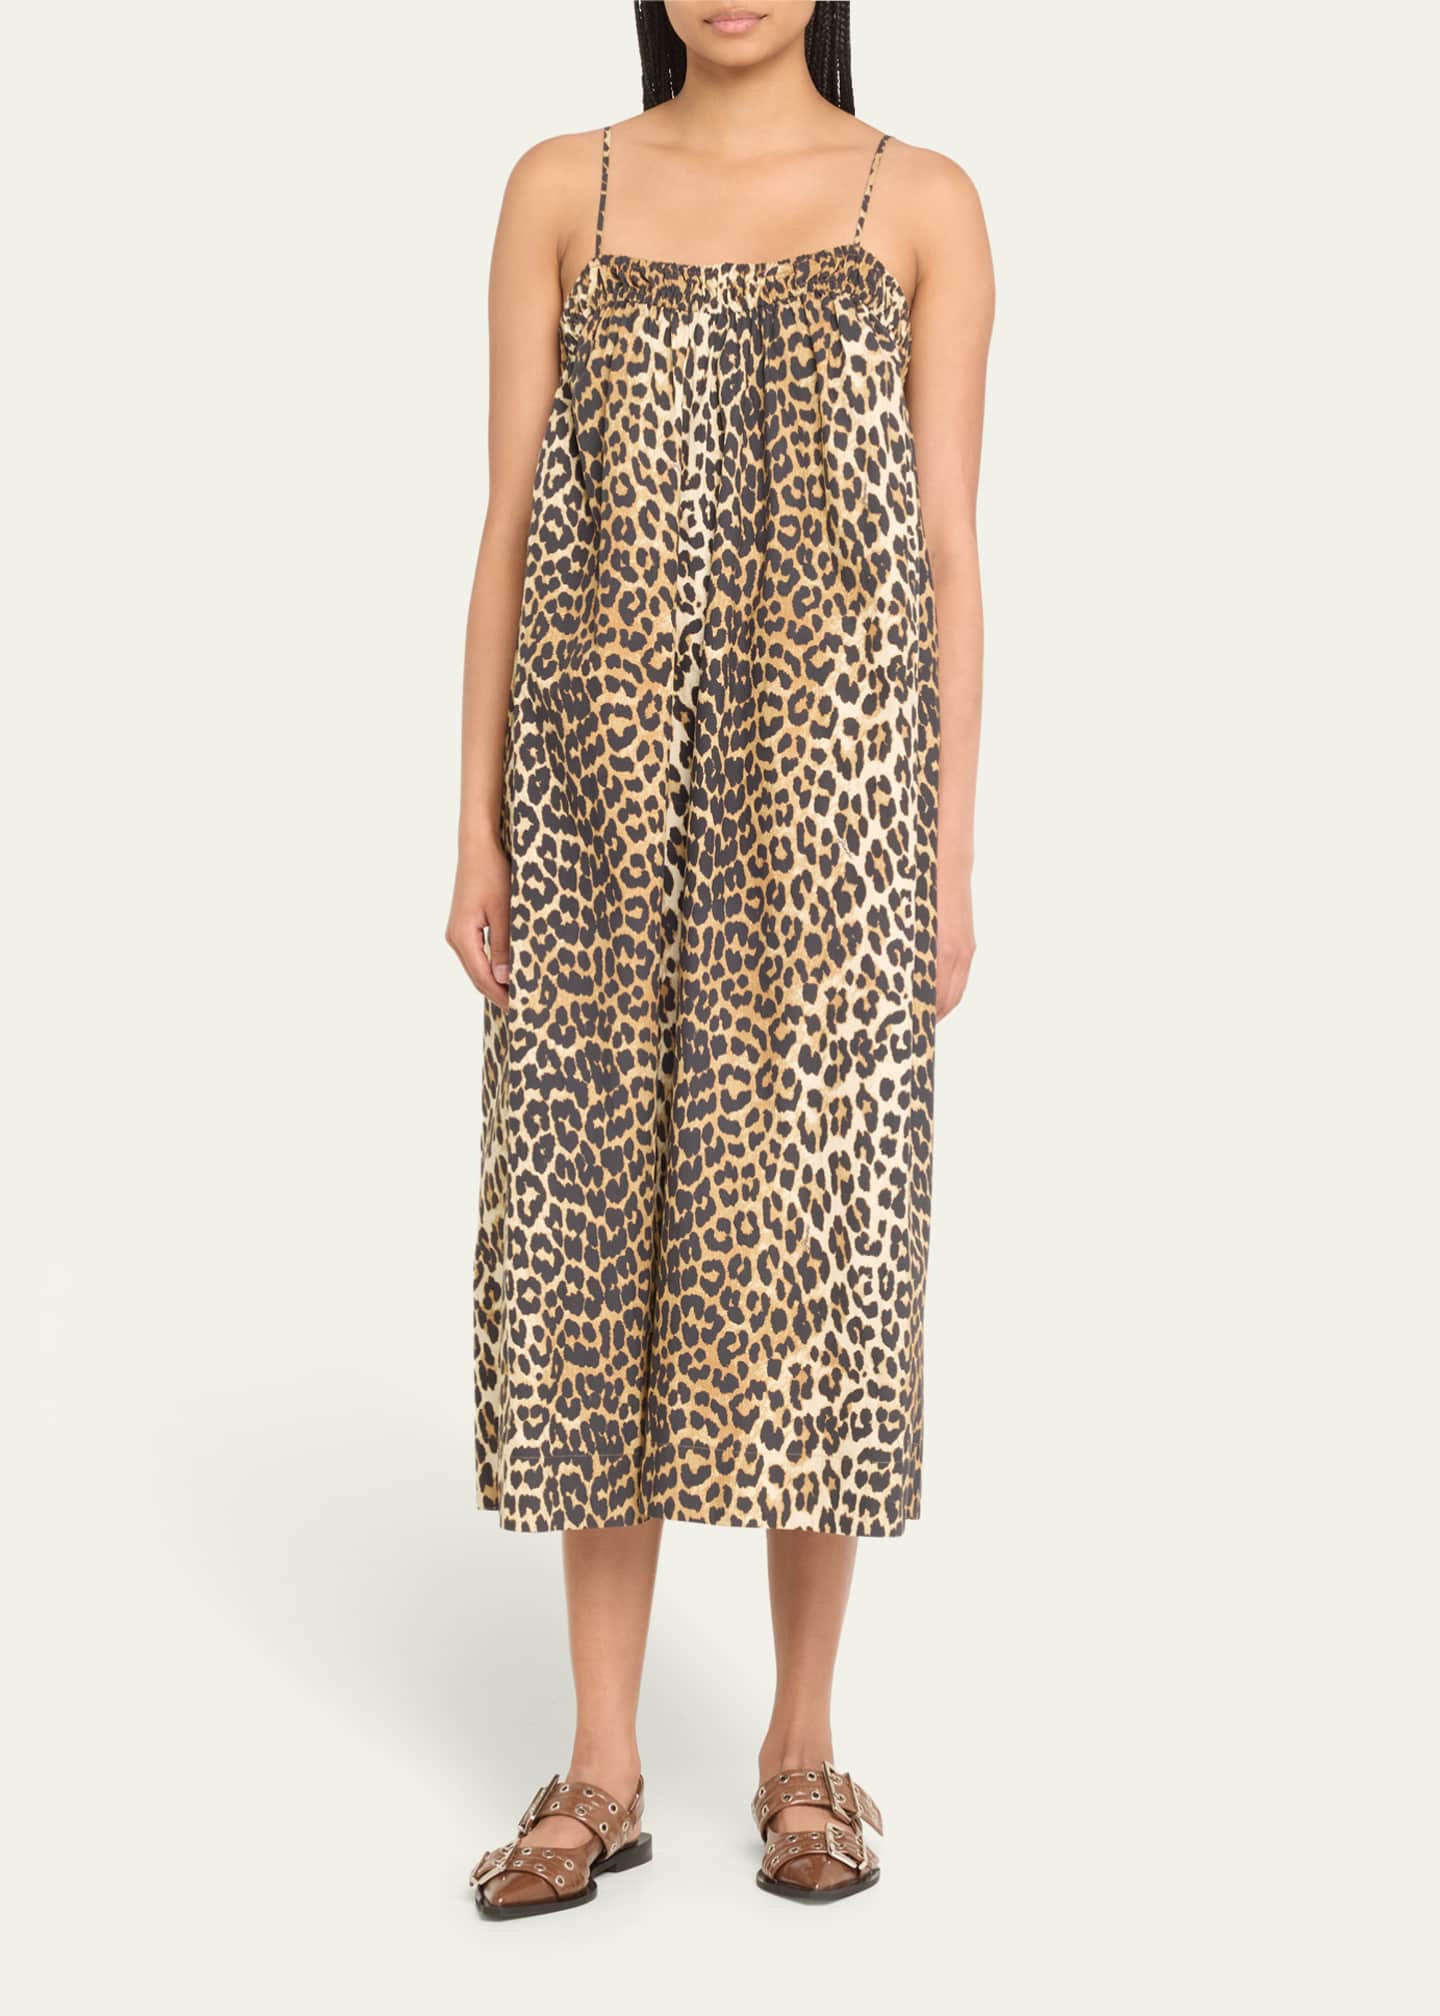 Ganni Spaghetti Strap Leopard-Print Midi Dress Image 2 of 5